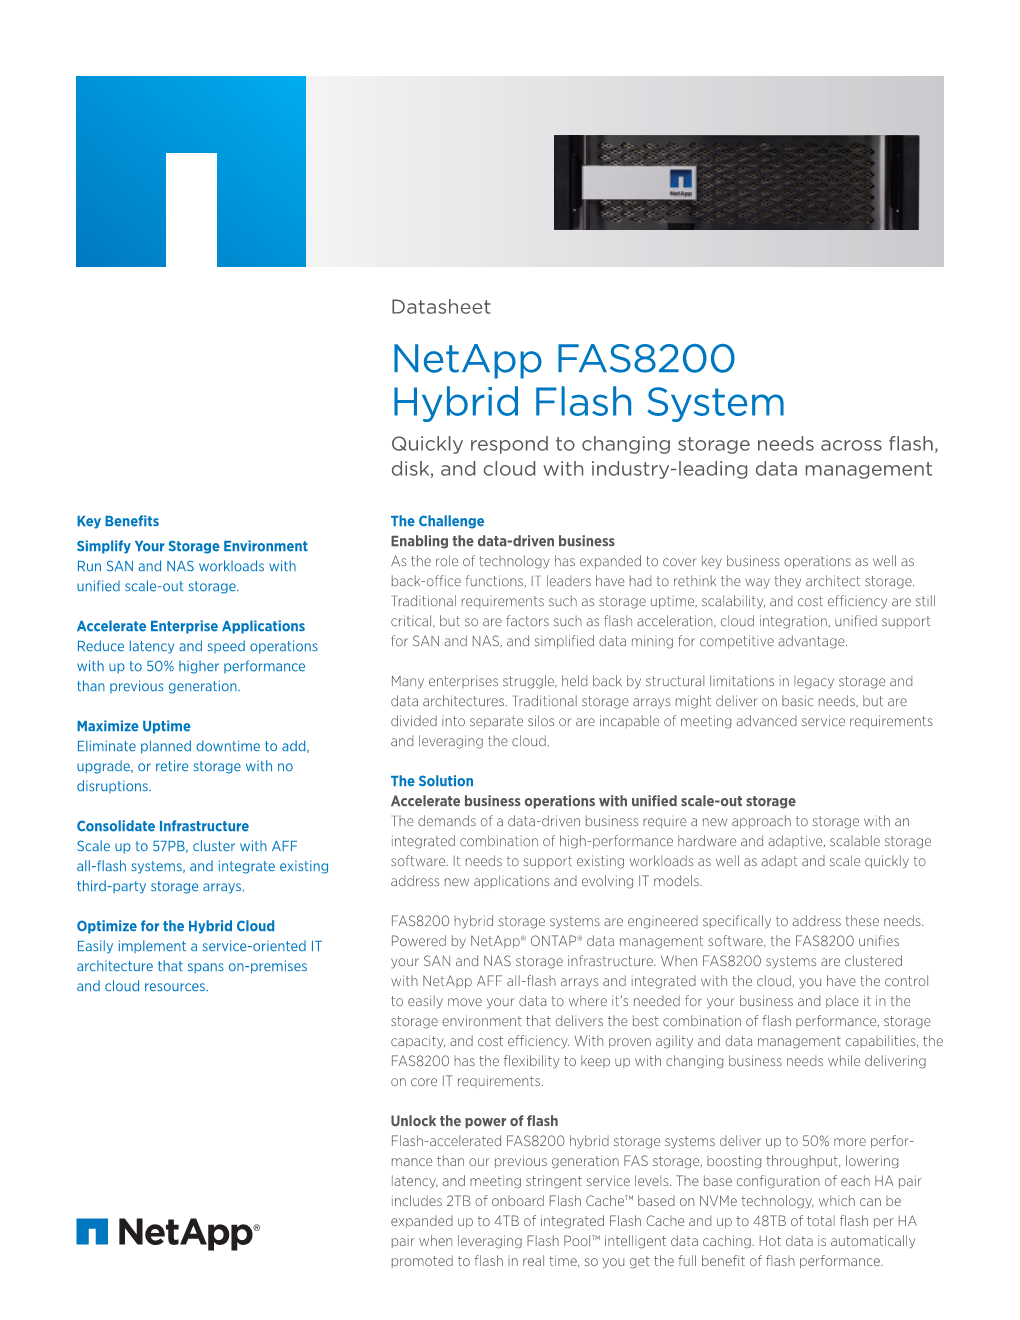 Netapp FAS8200 System Datasheet